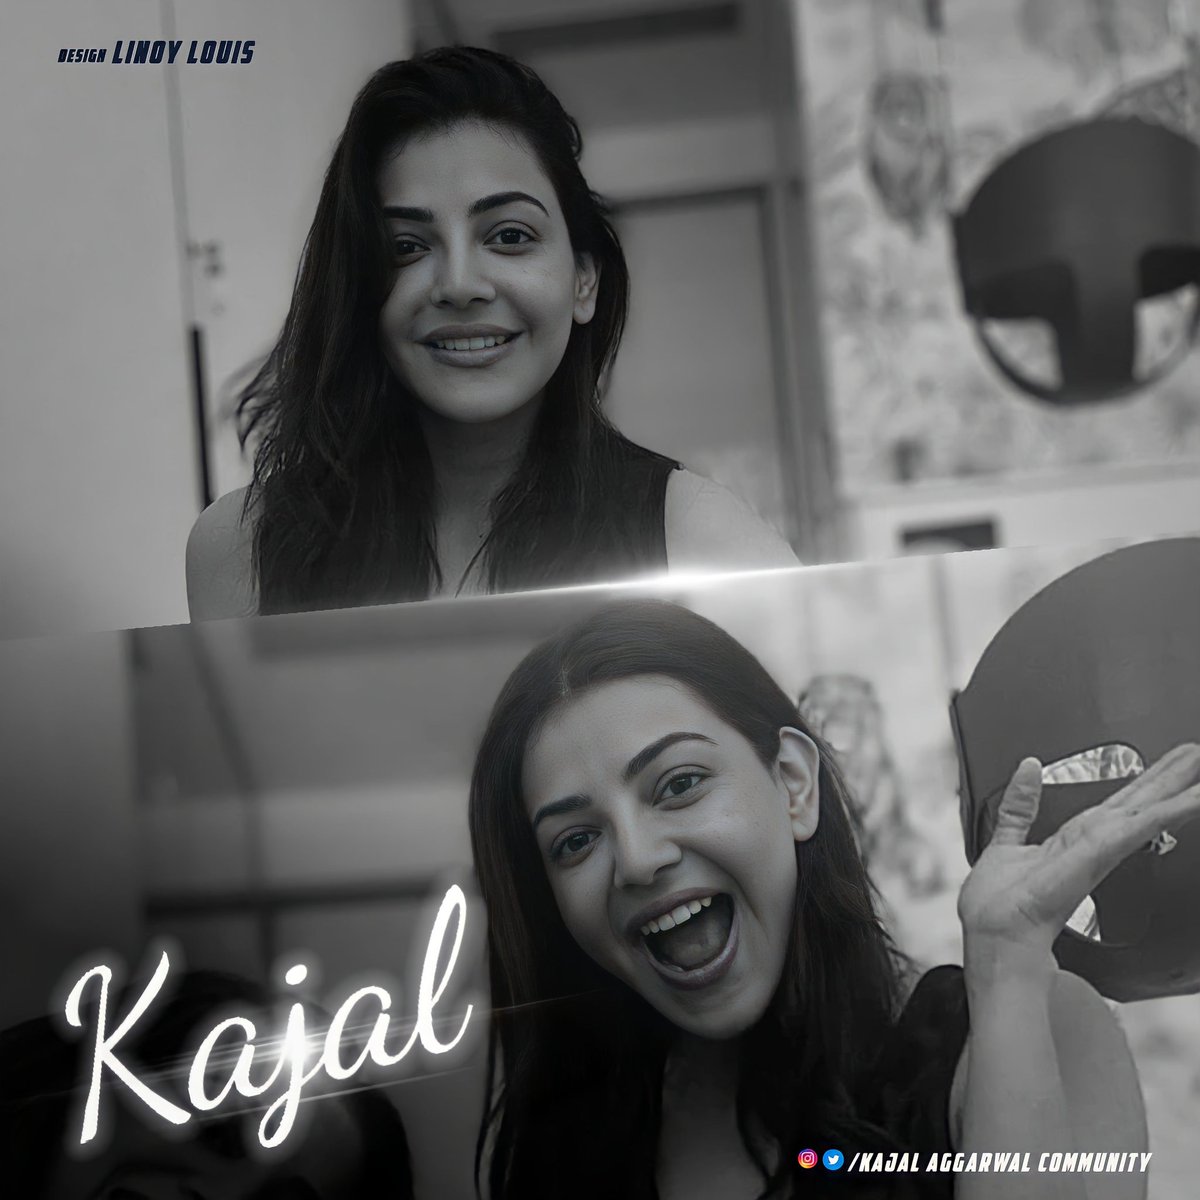 Kajal 🖤

#KajalAggarwal #Satyabhama #Kajal #KajalAgarwal #Indian2